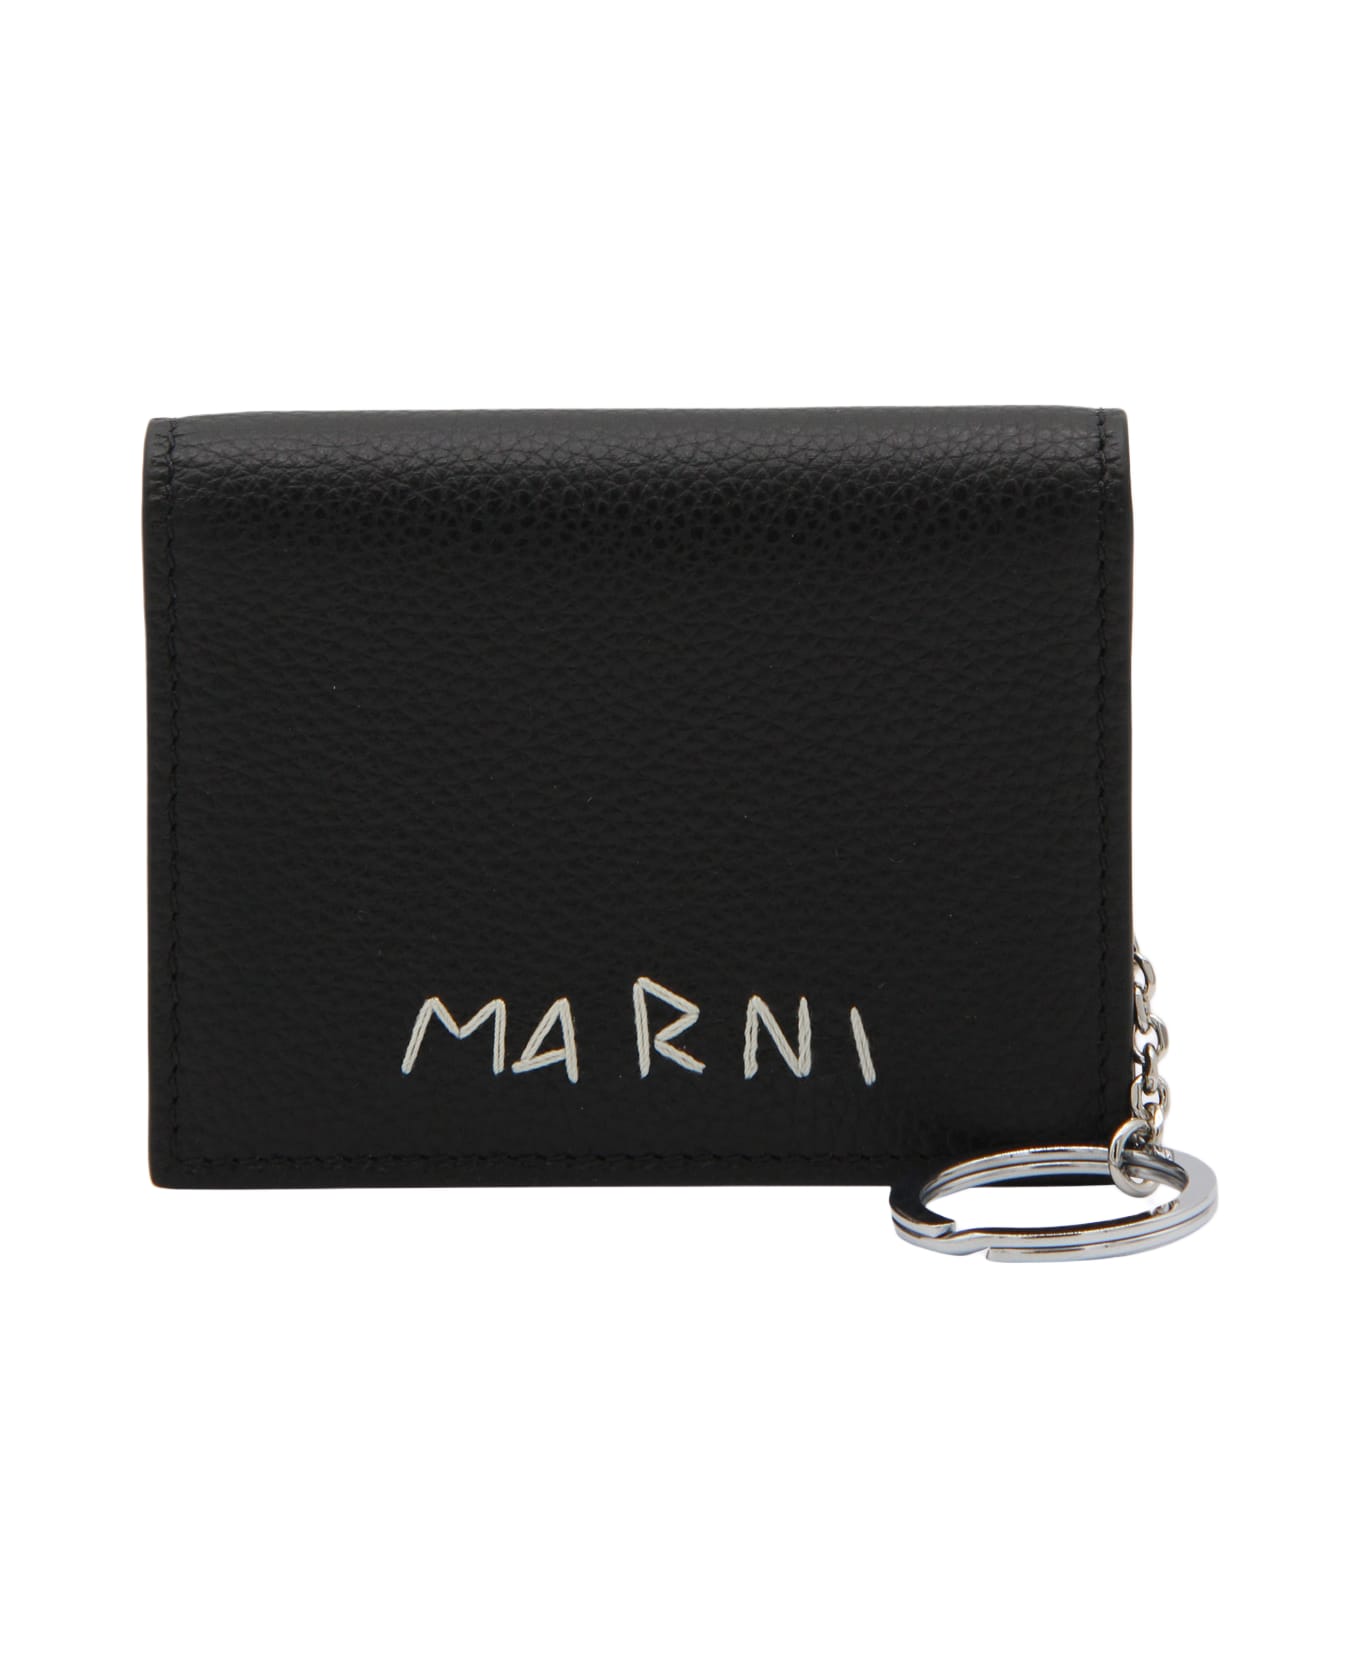 Marni Black Leather Wallet - Black 財布